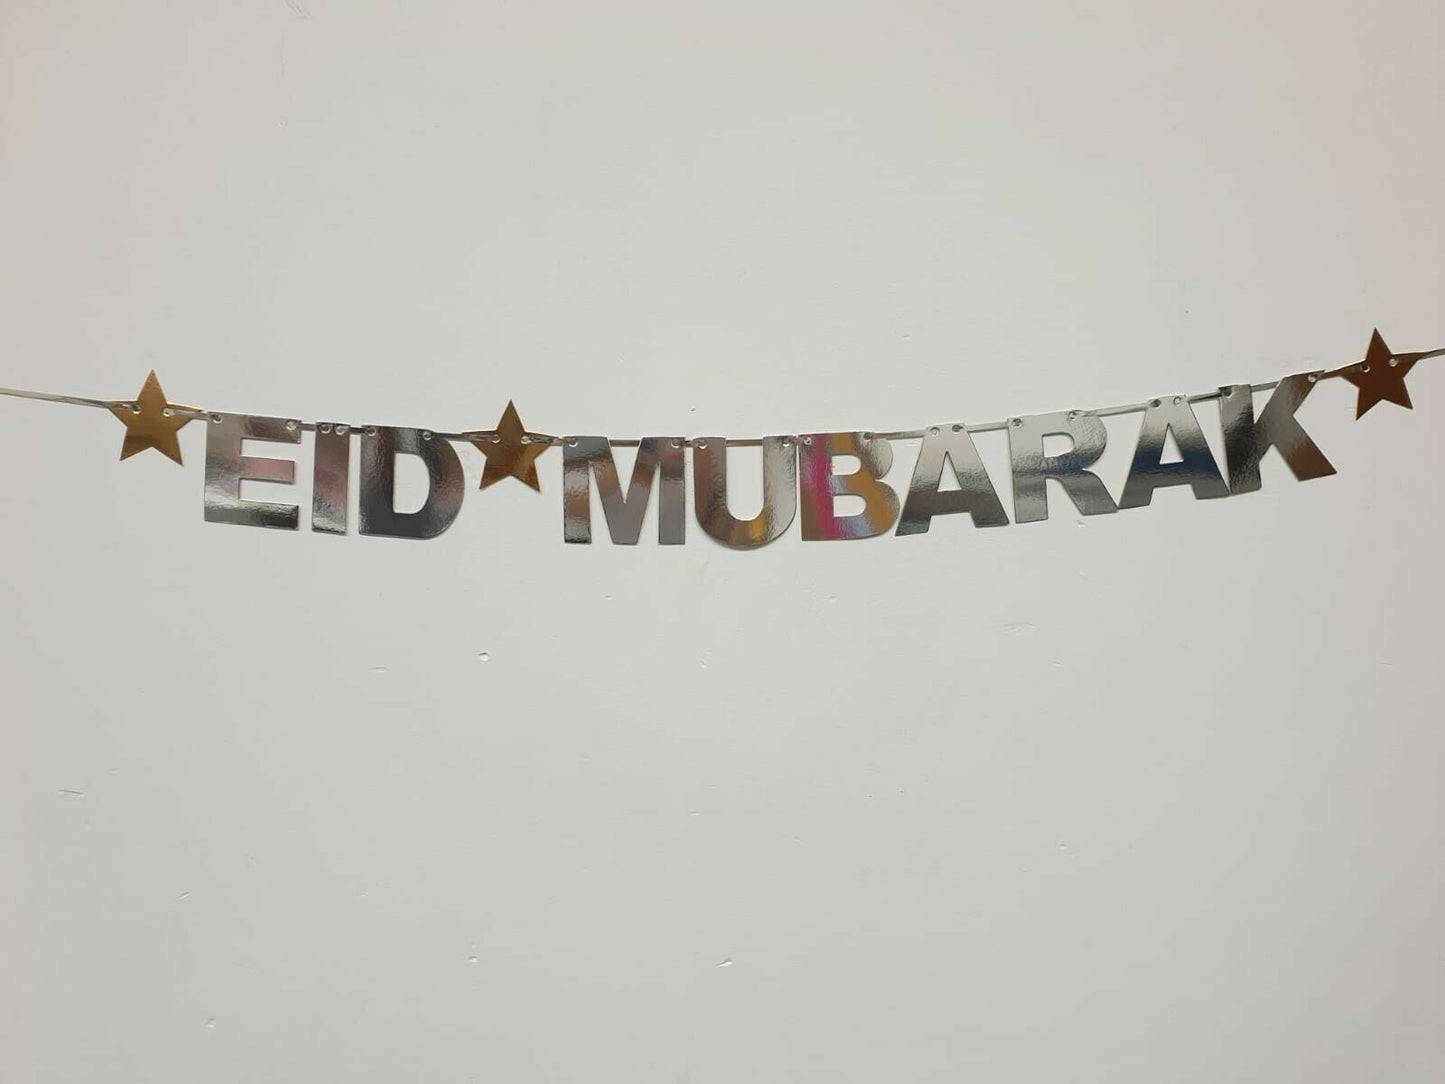 Eid Mubarak Bunting Banners